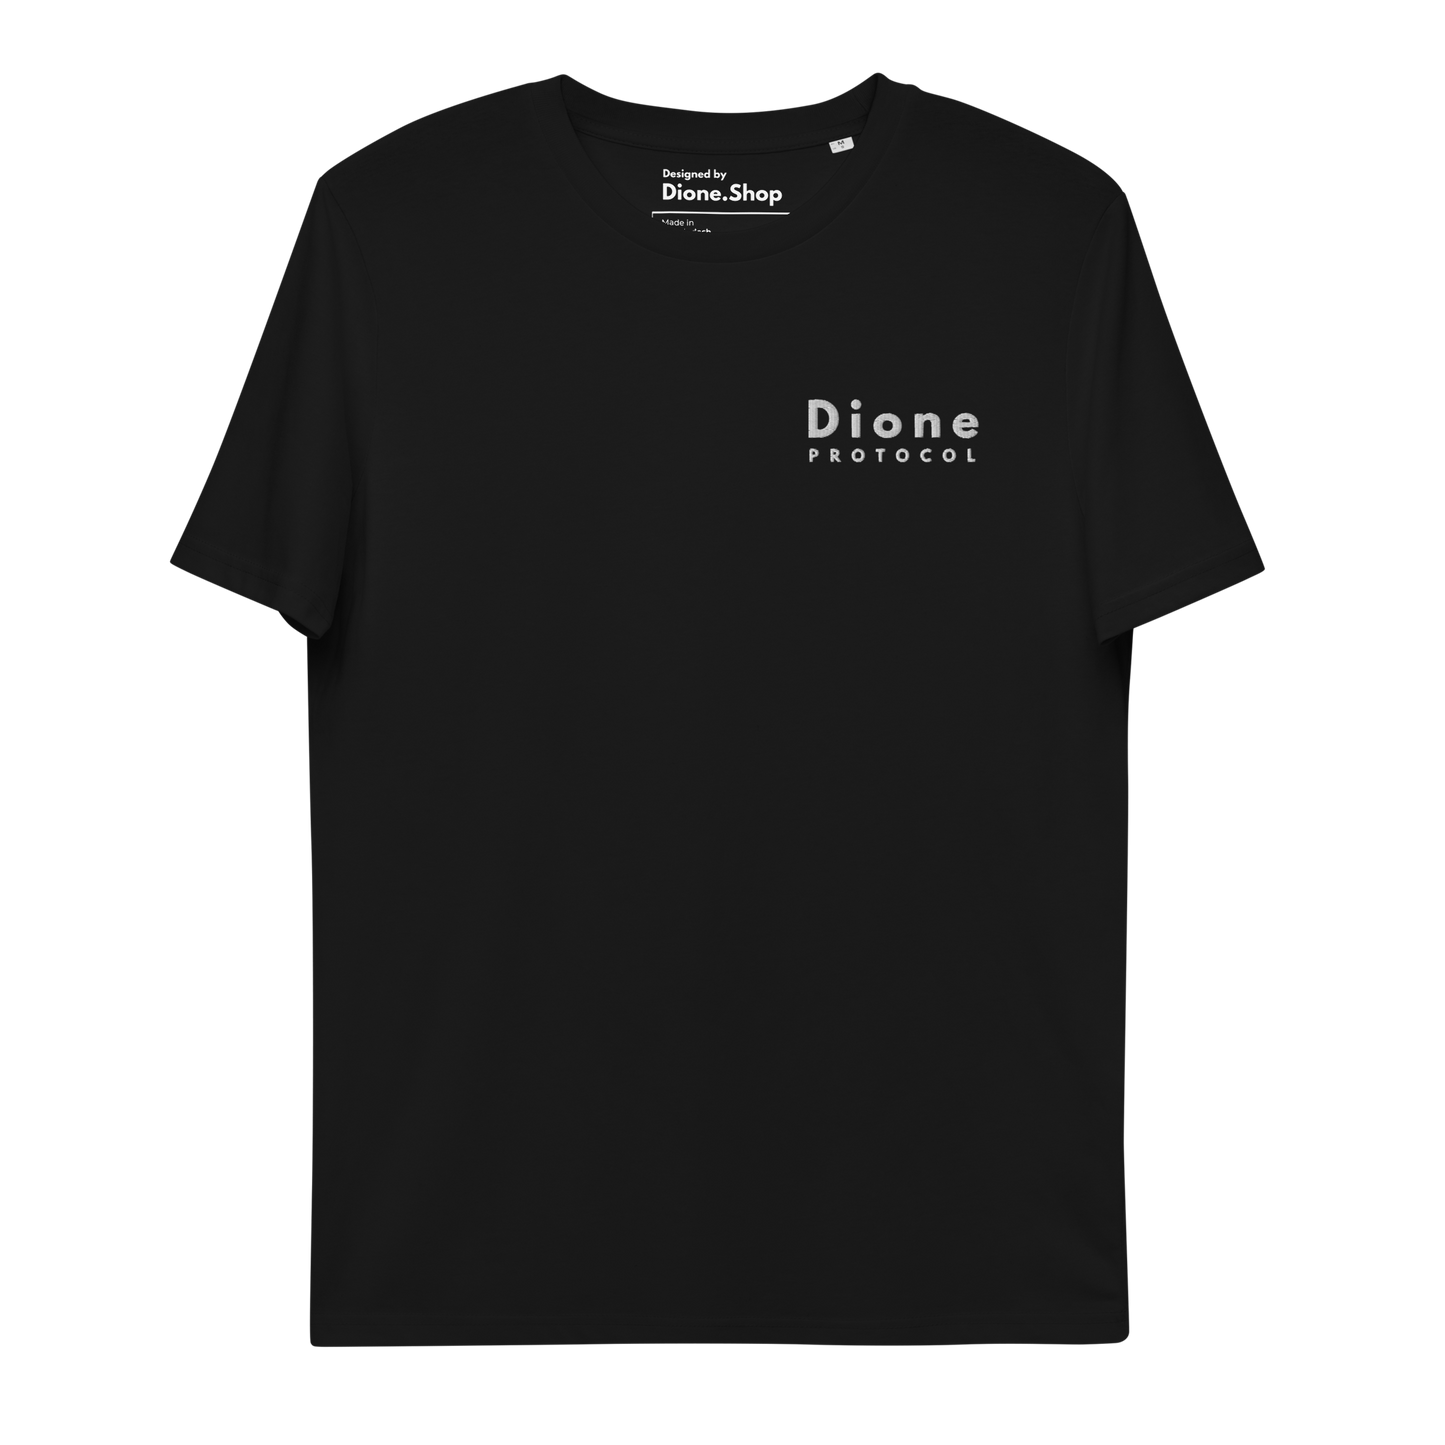 T-Shirt - Discreet V1.0 - Black, Navy, Grey - Premium